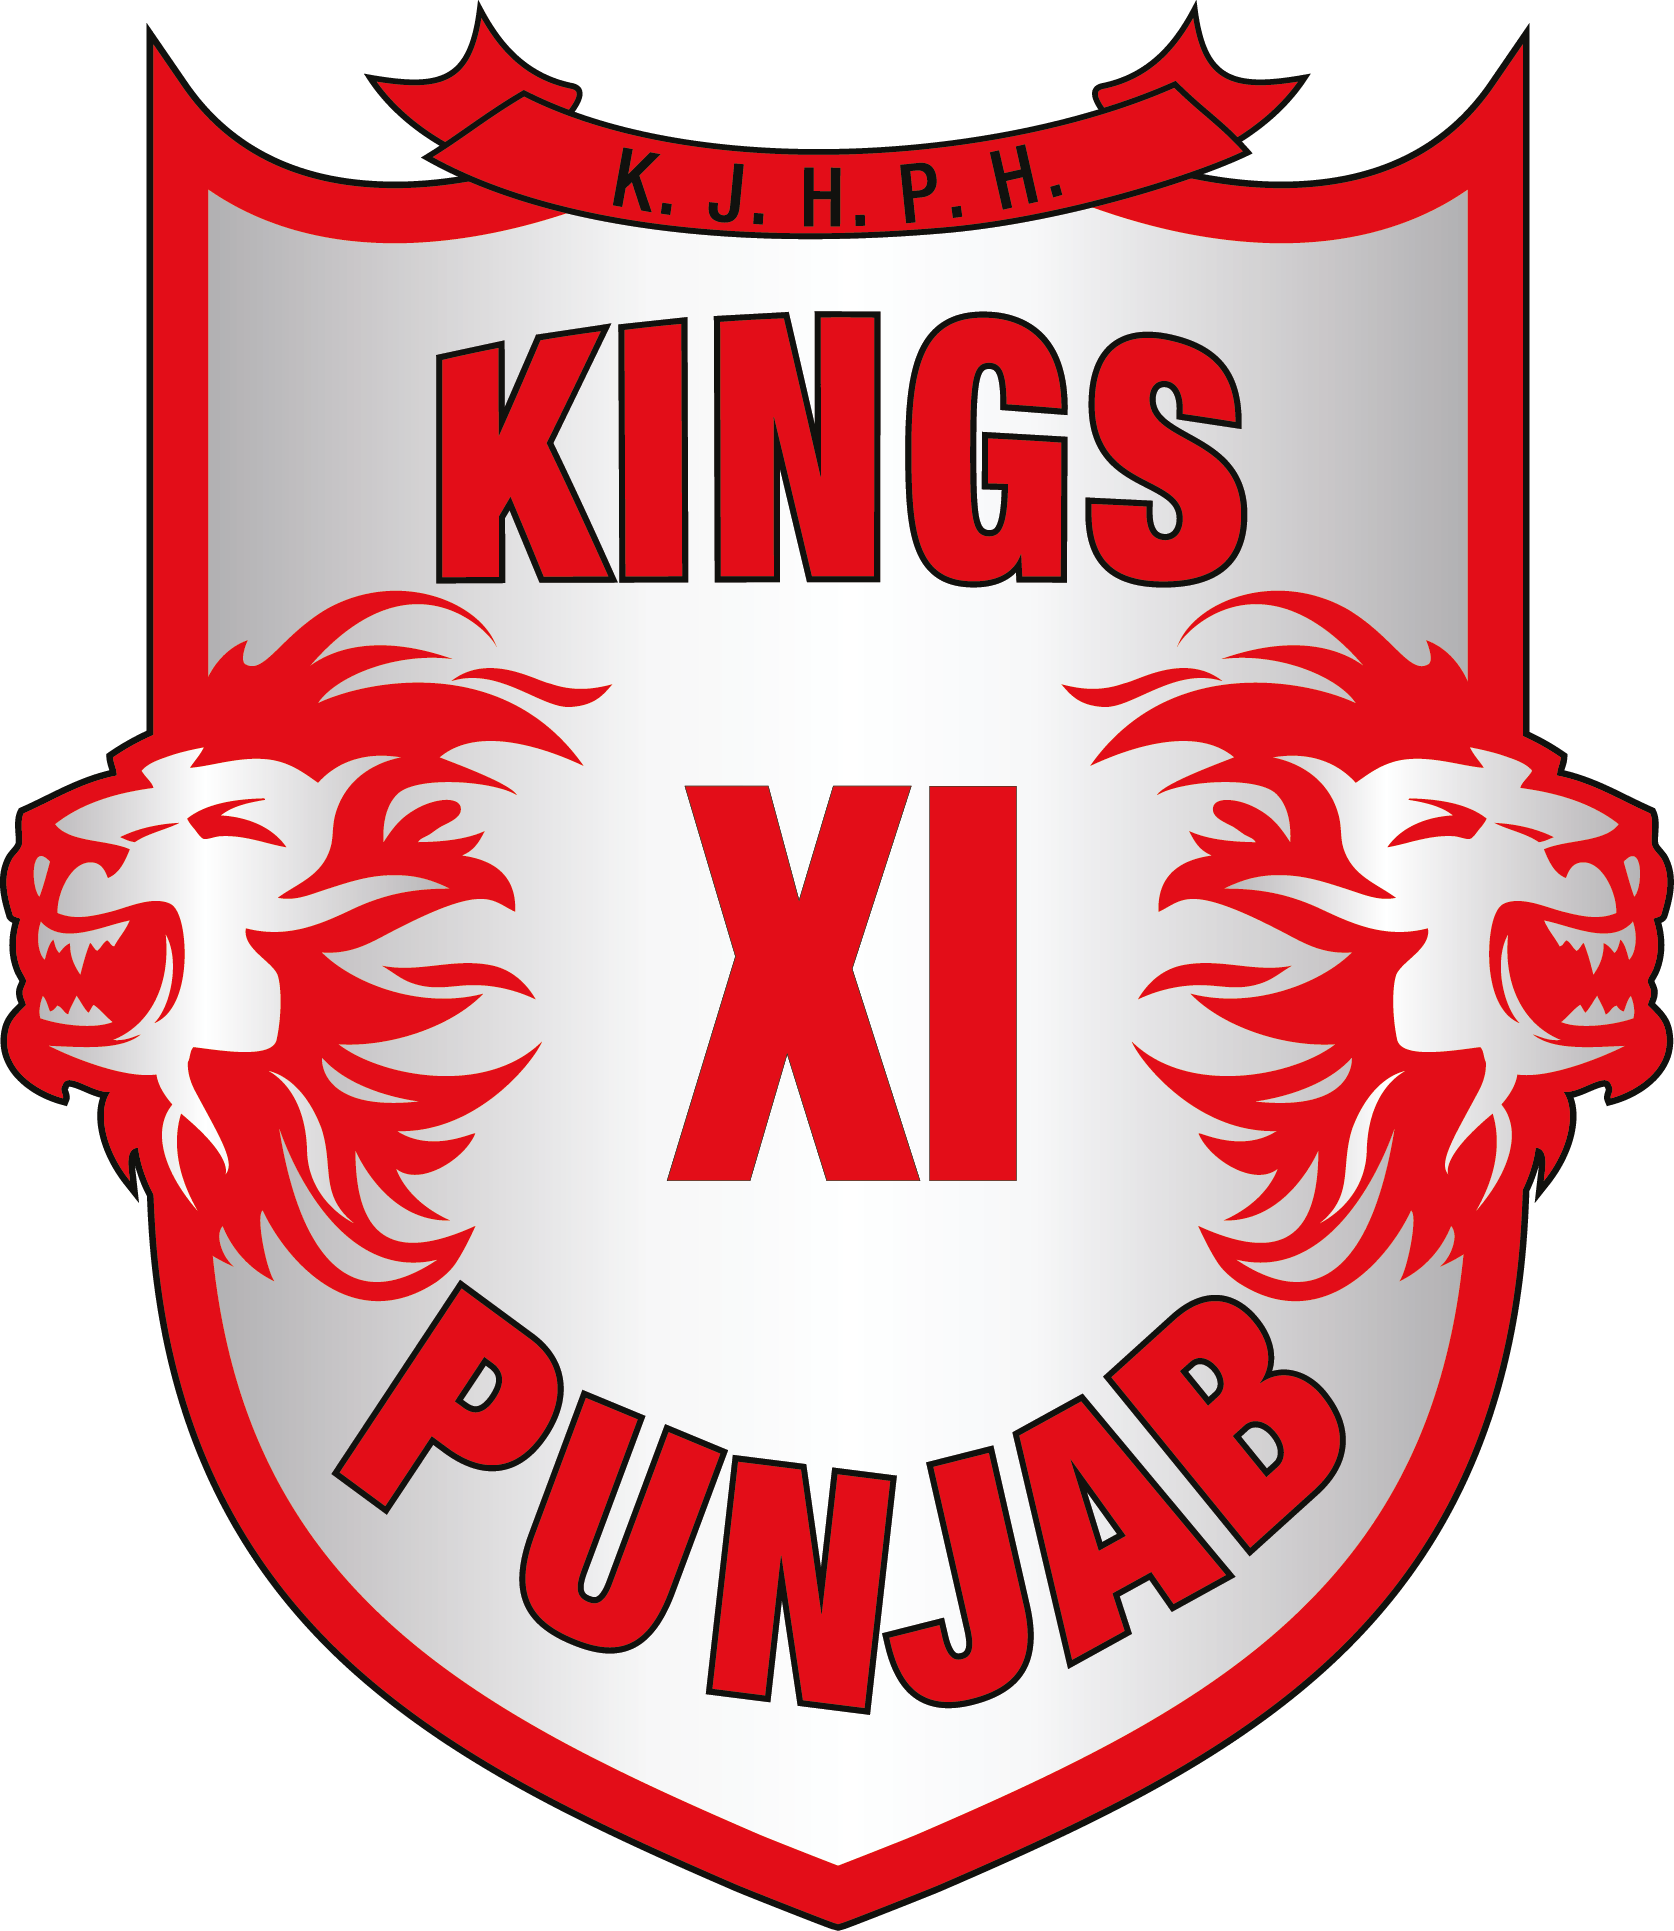 Kings XI Punjab Logo [kxip.in]